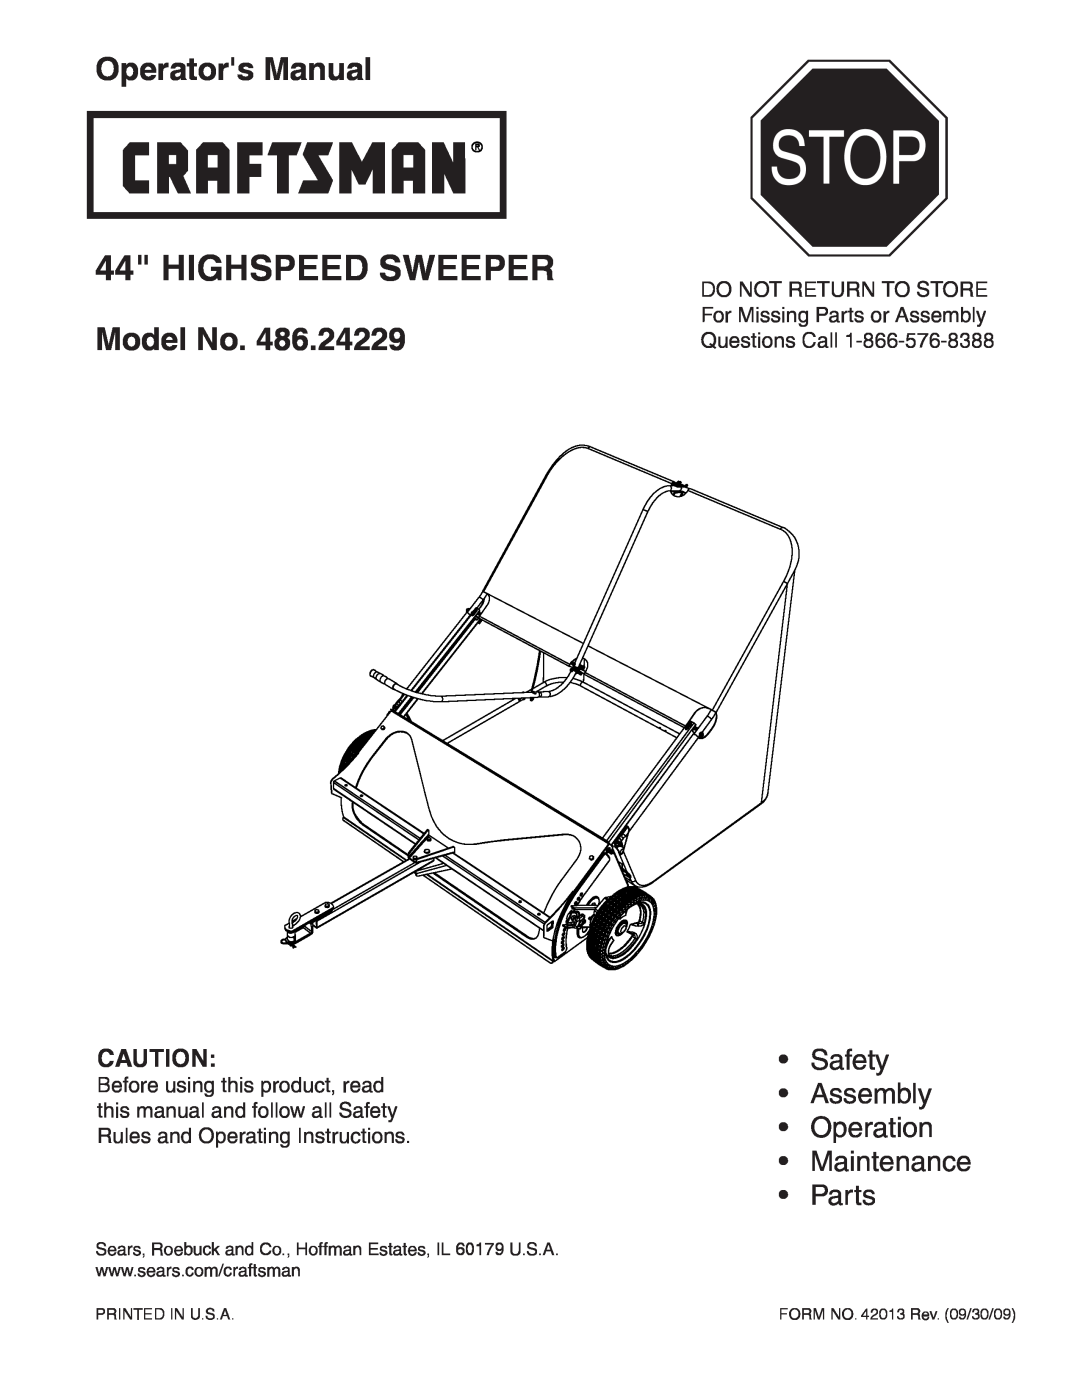 Craftsman 486.24229 manual Stop, Highspeed Sweeper, Operators Manual, Model No 